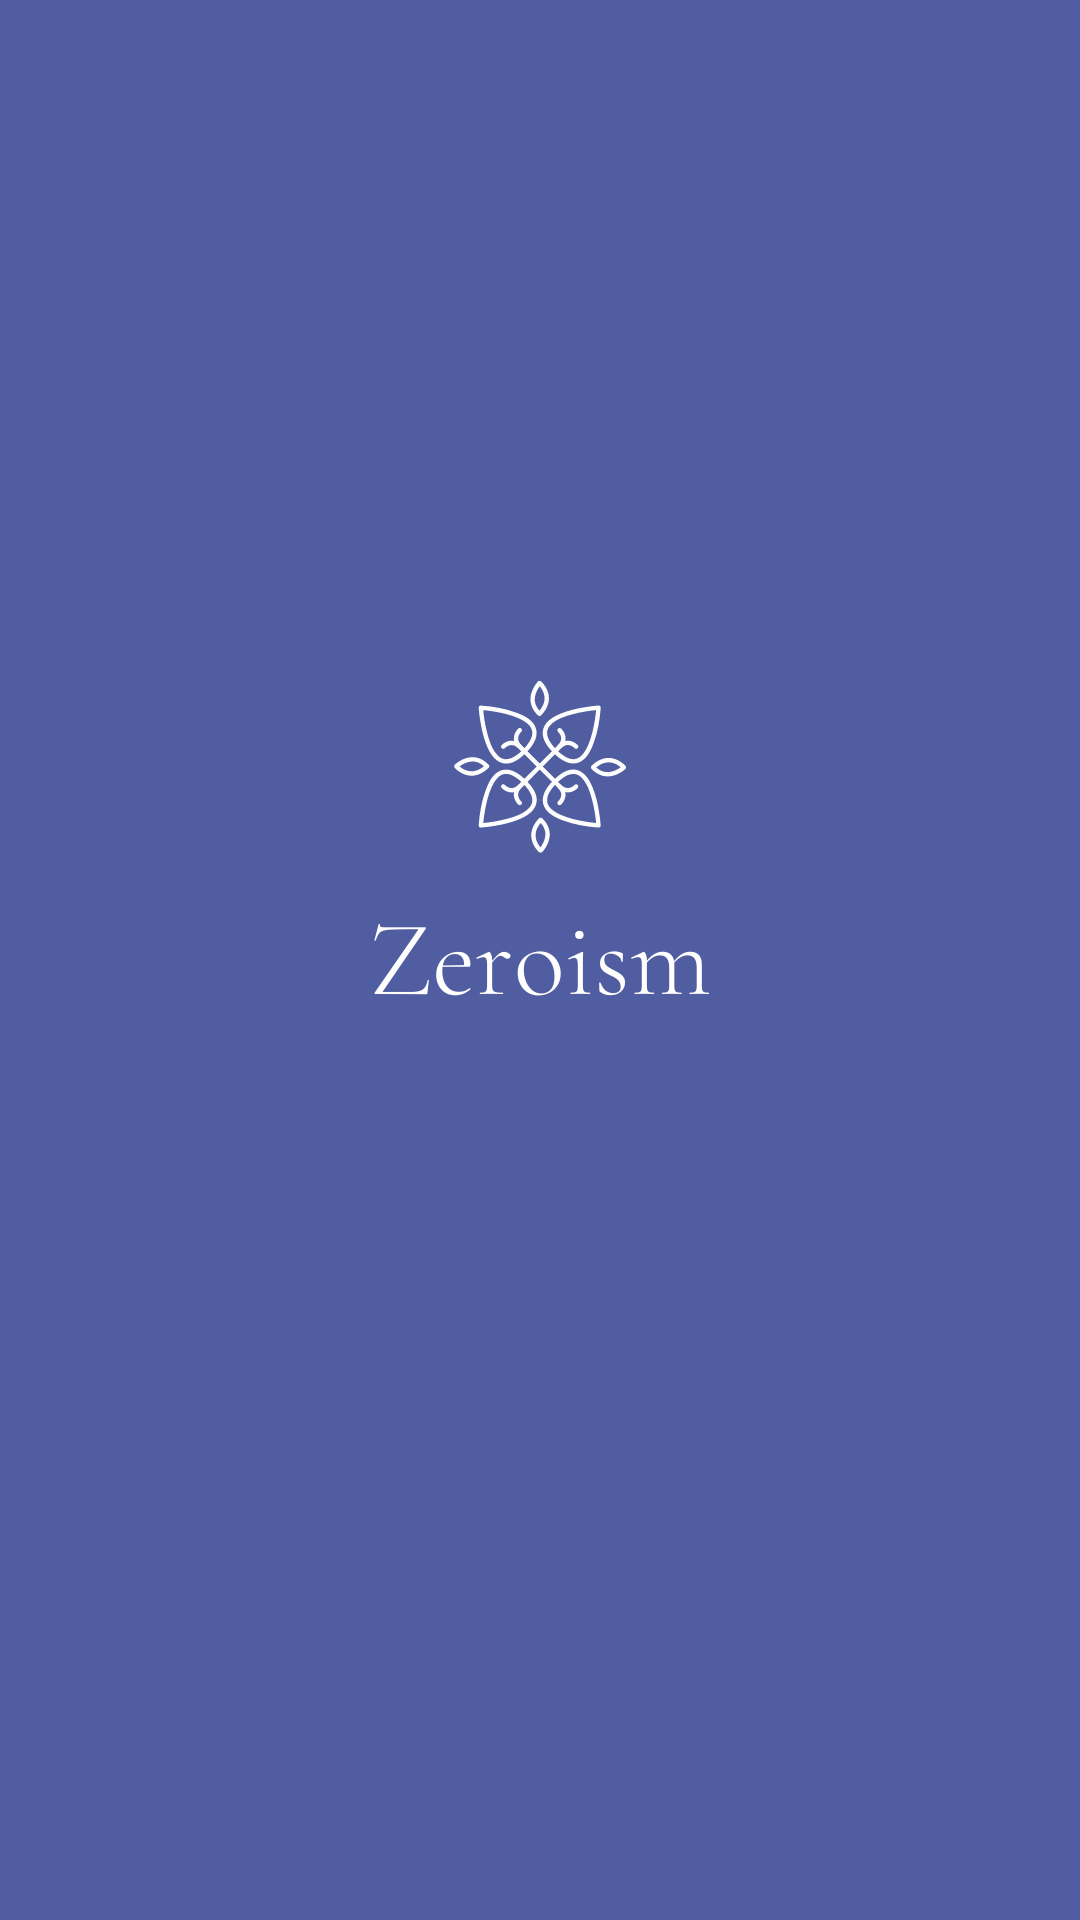 Zeroism